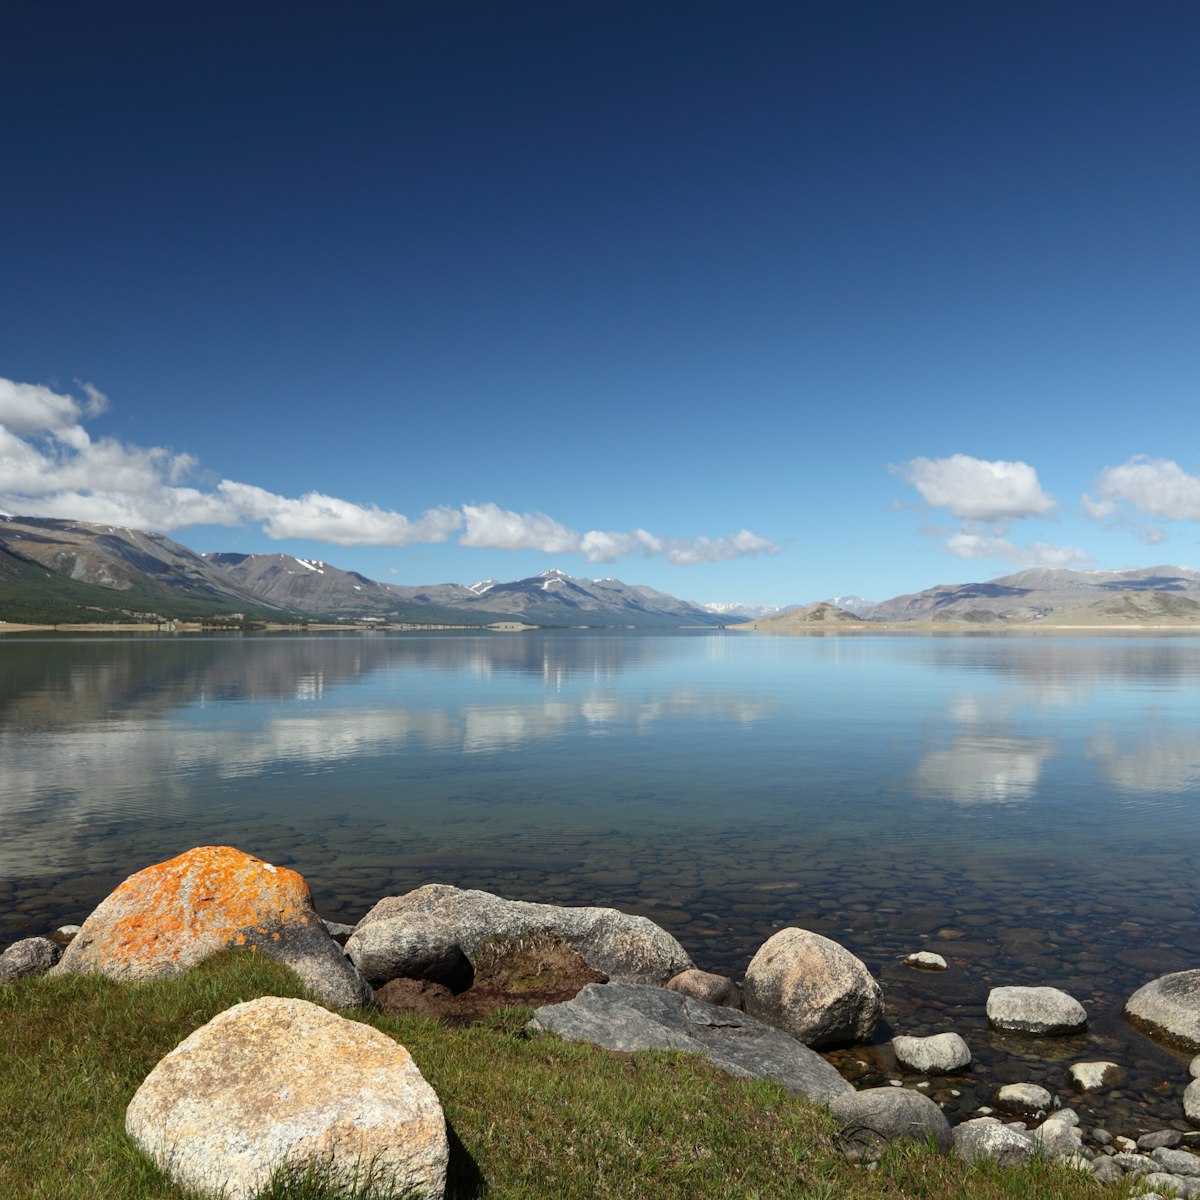 Khoton Nuur lake in Mongolian Altai.